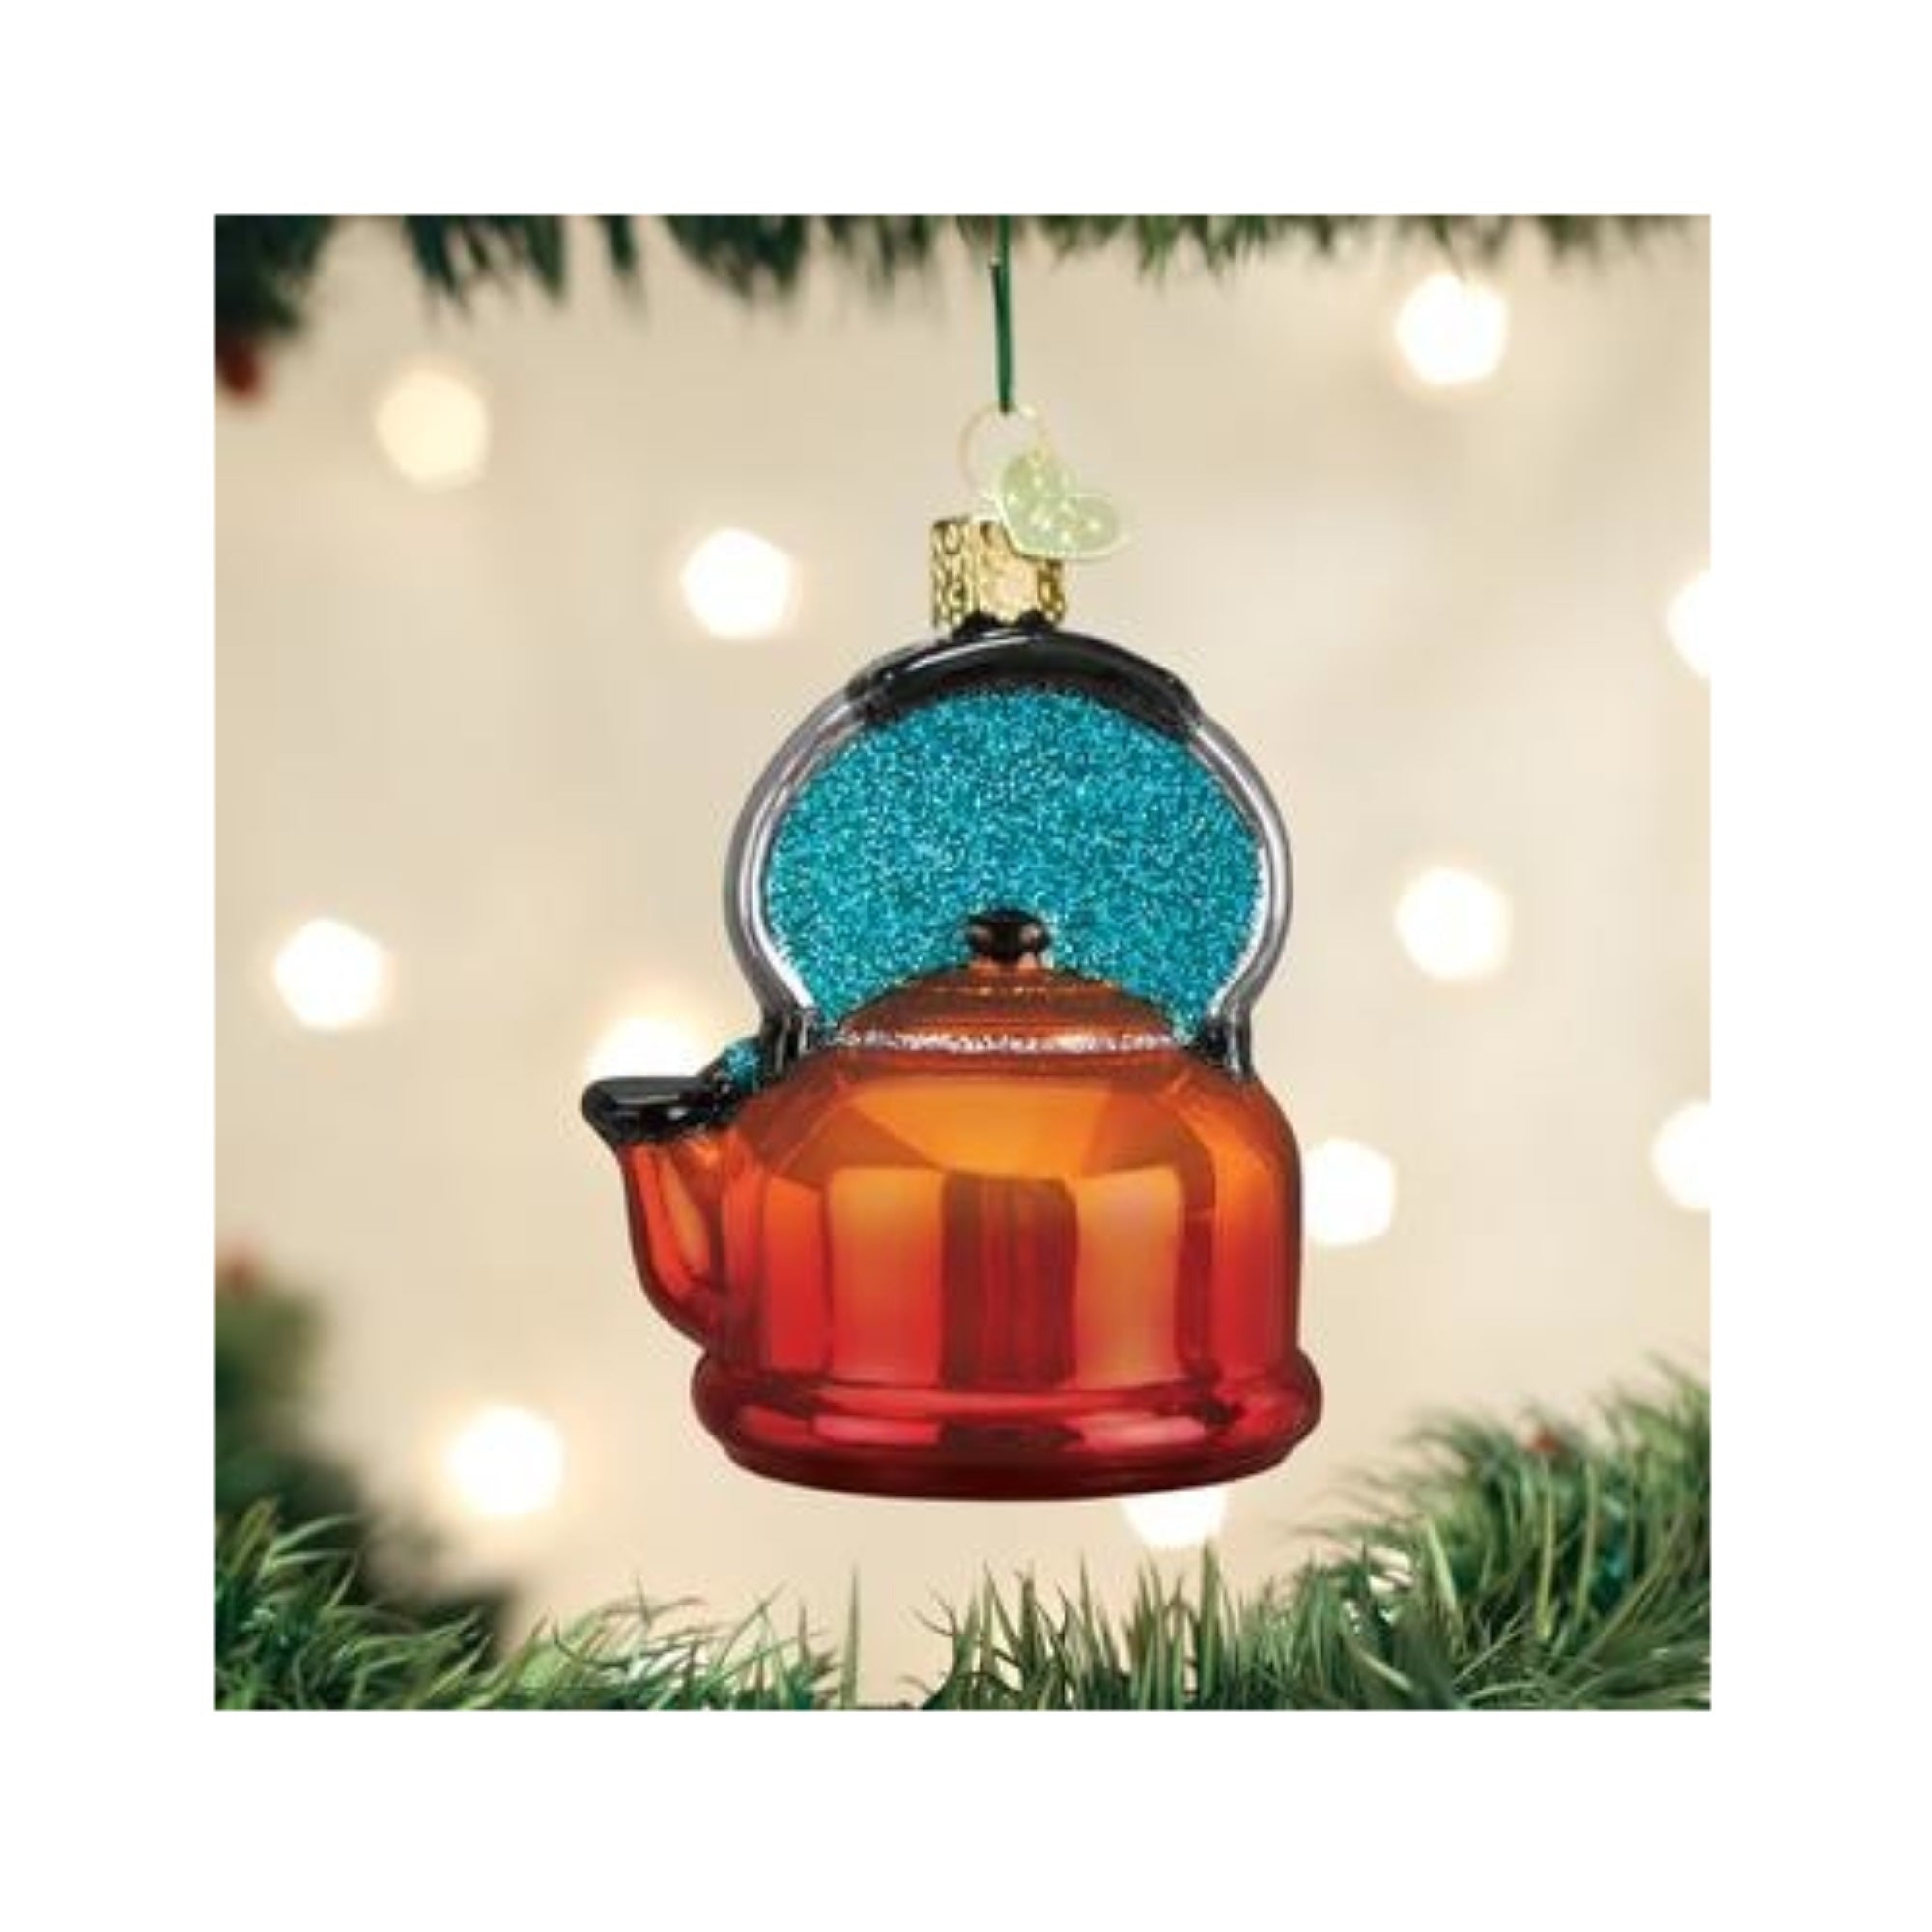 Old World Christmas Tea Kettle Glass Blown Ornament